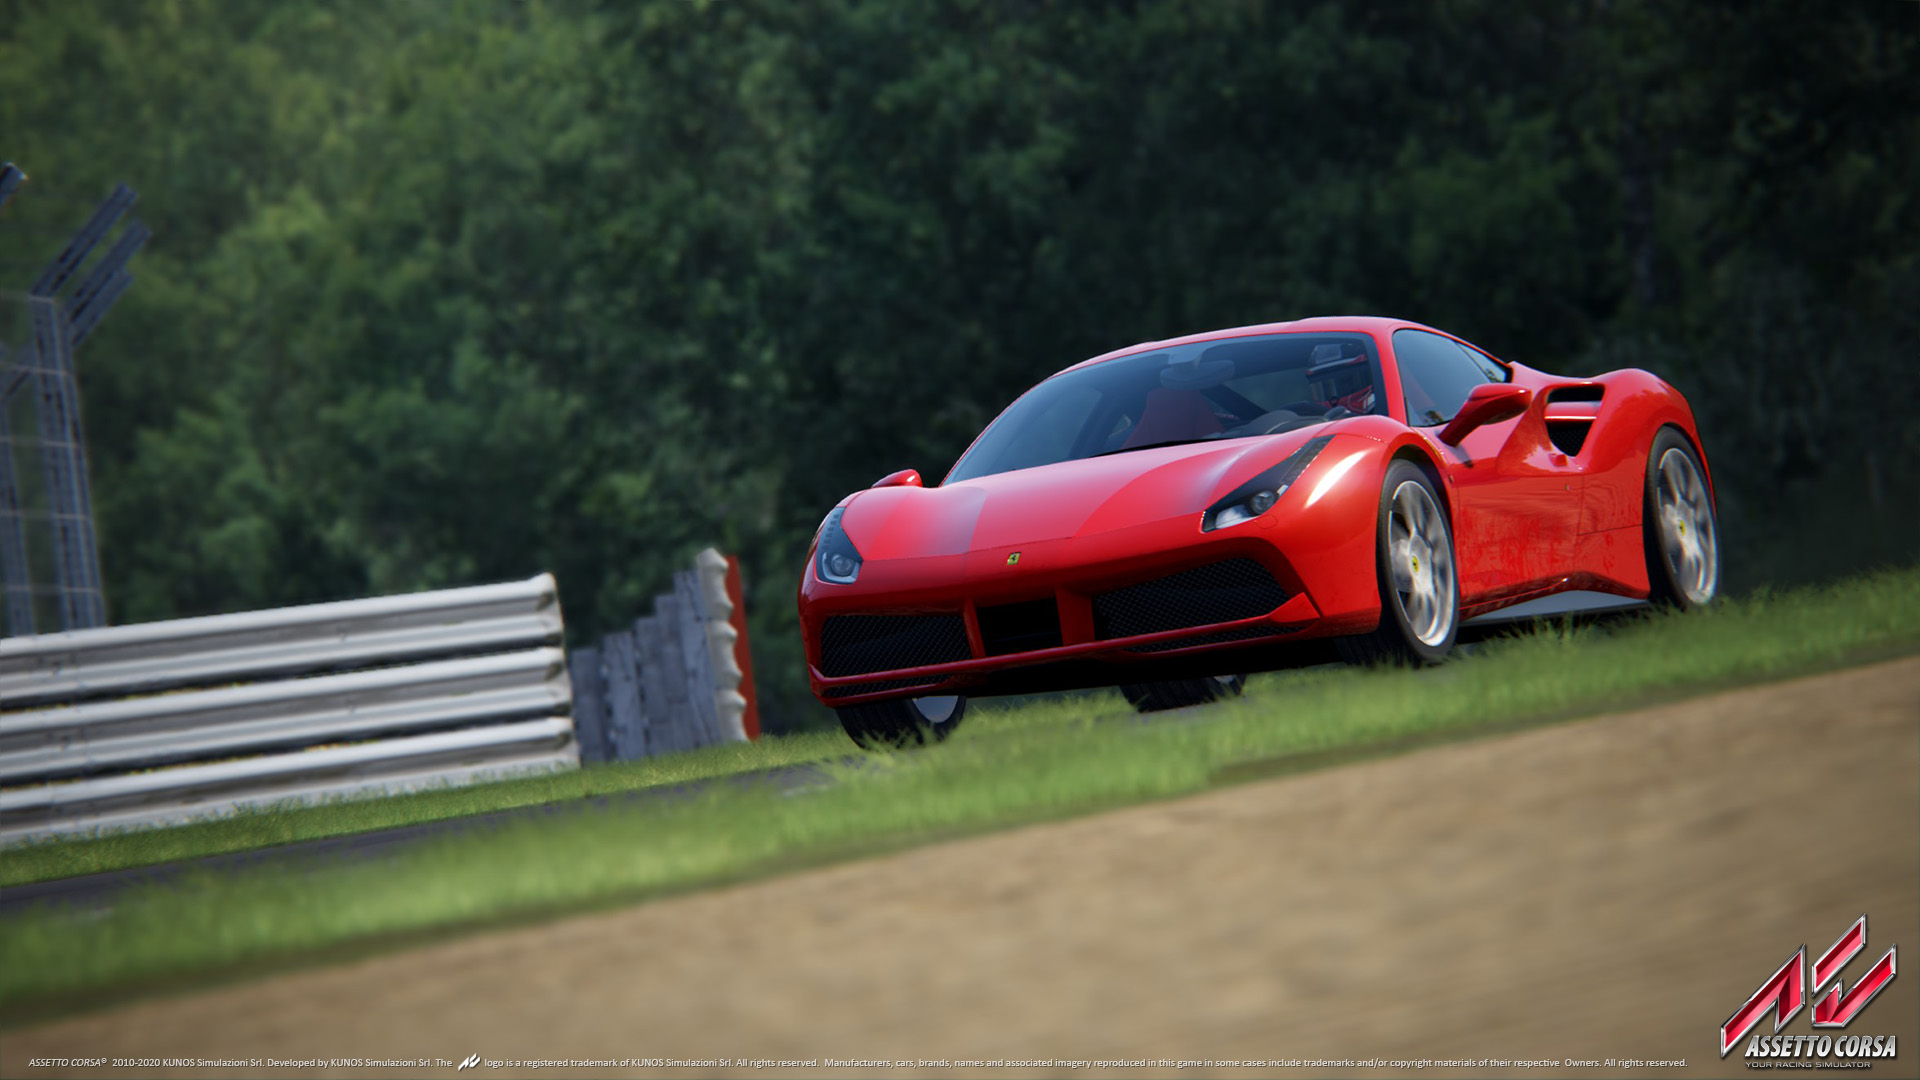 Assetto-Corsa-Tripl3-Pack-Ferrari-488-GTB-01.jpg